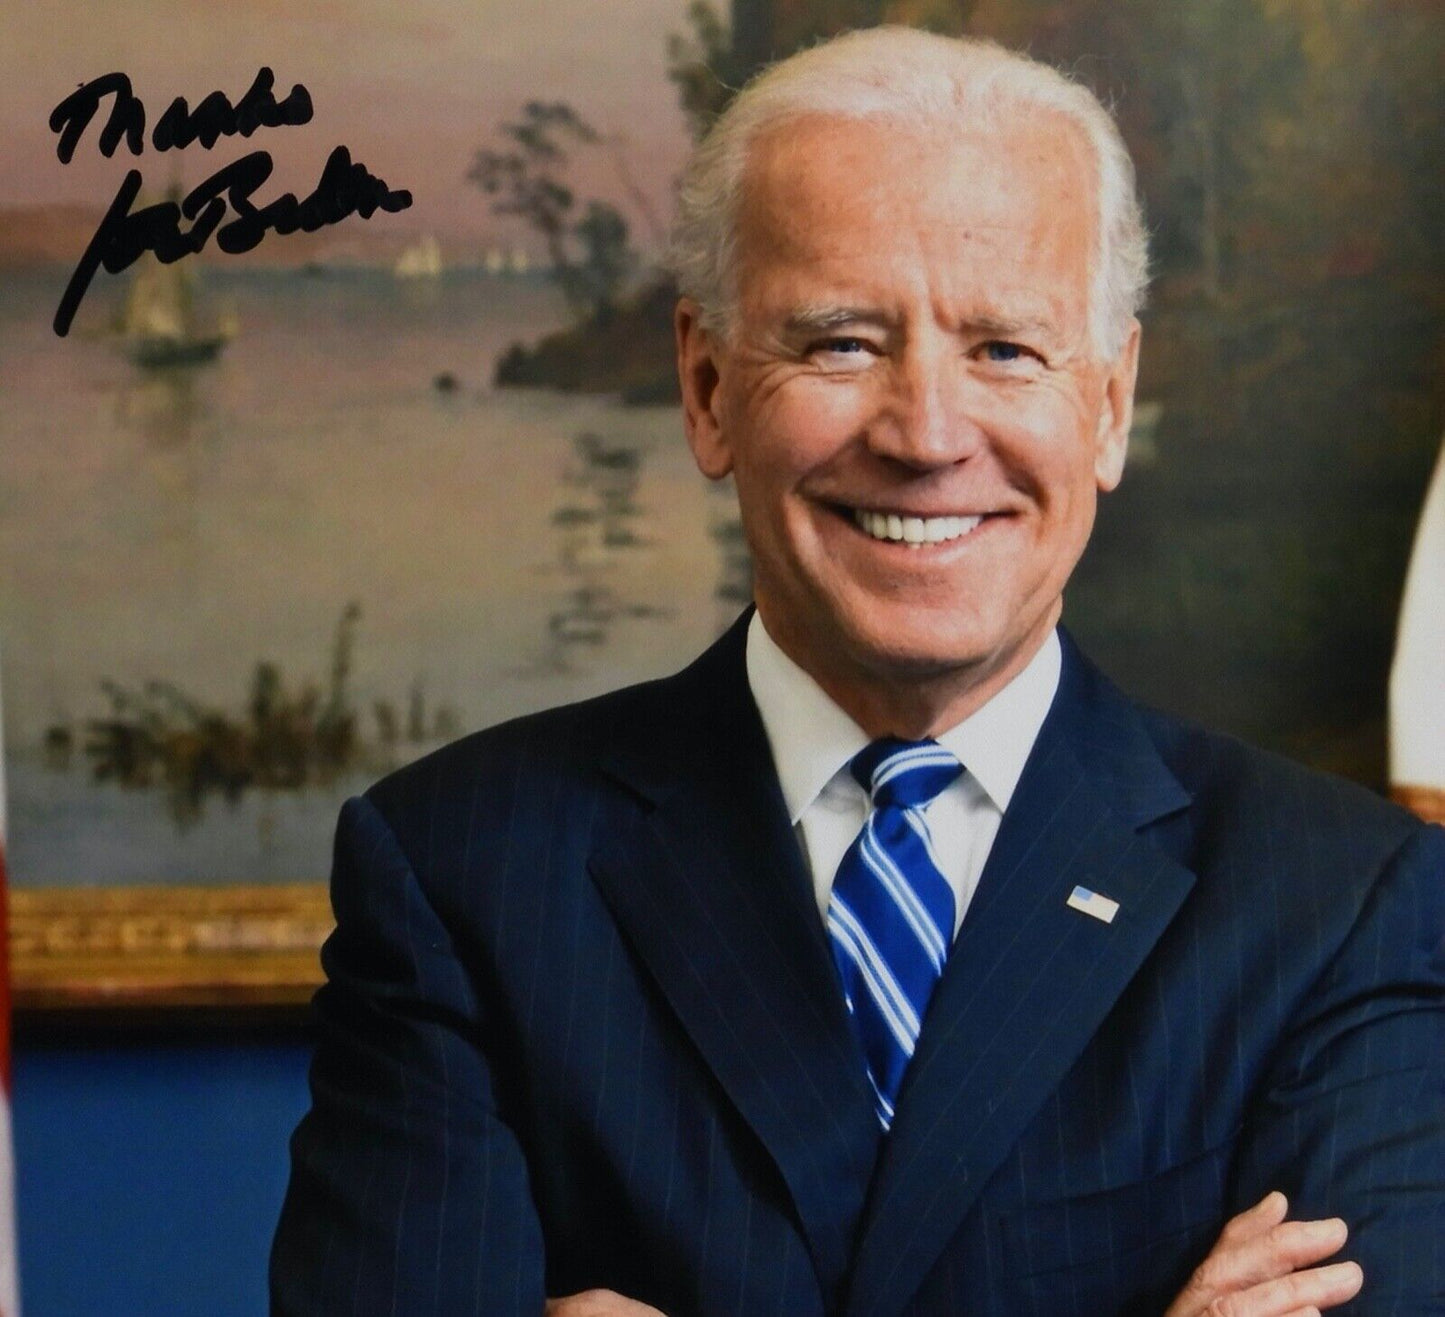 Joe Biden 46th President Beckett Autograph Signed Photo COA 8 x 10